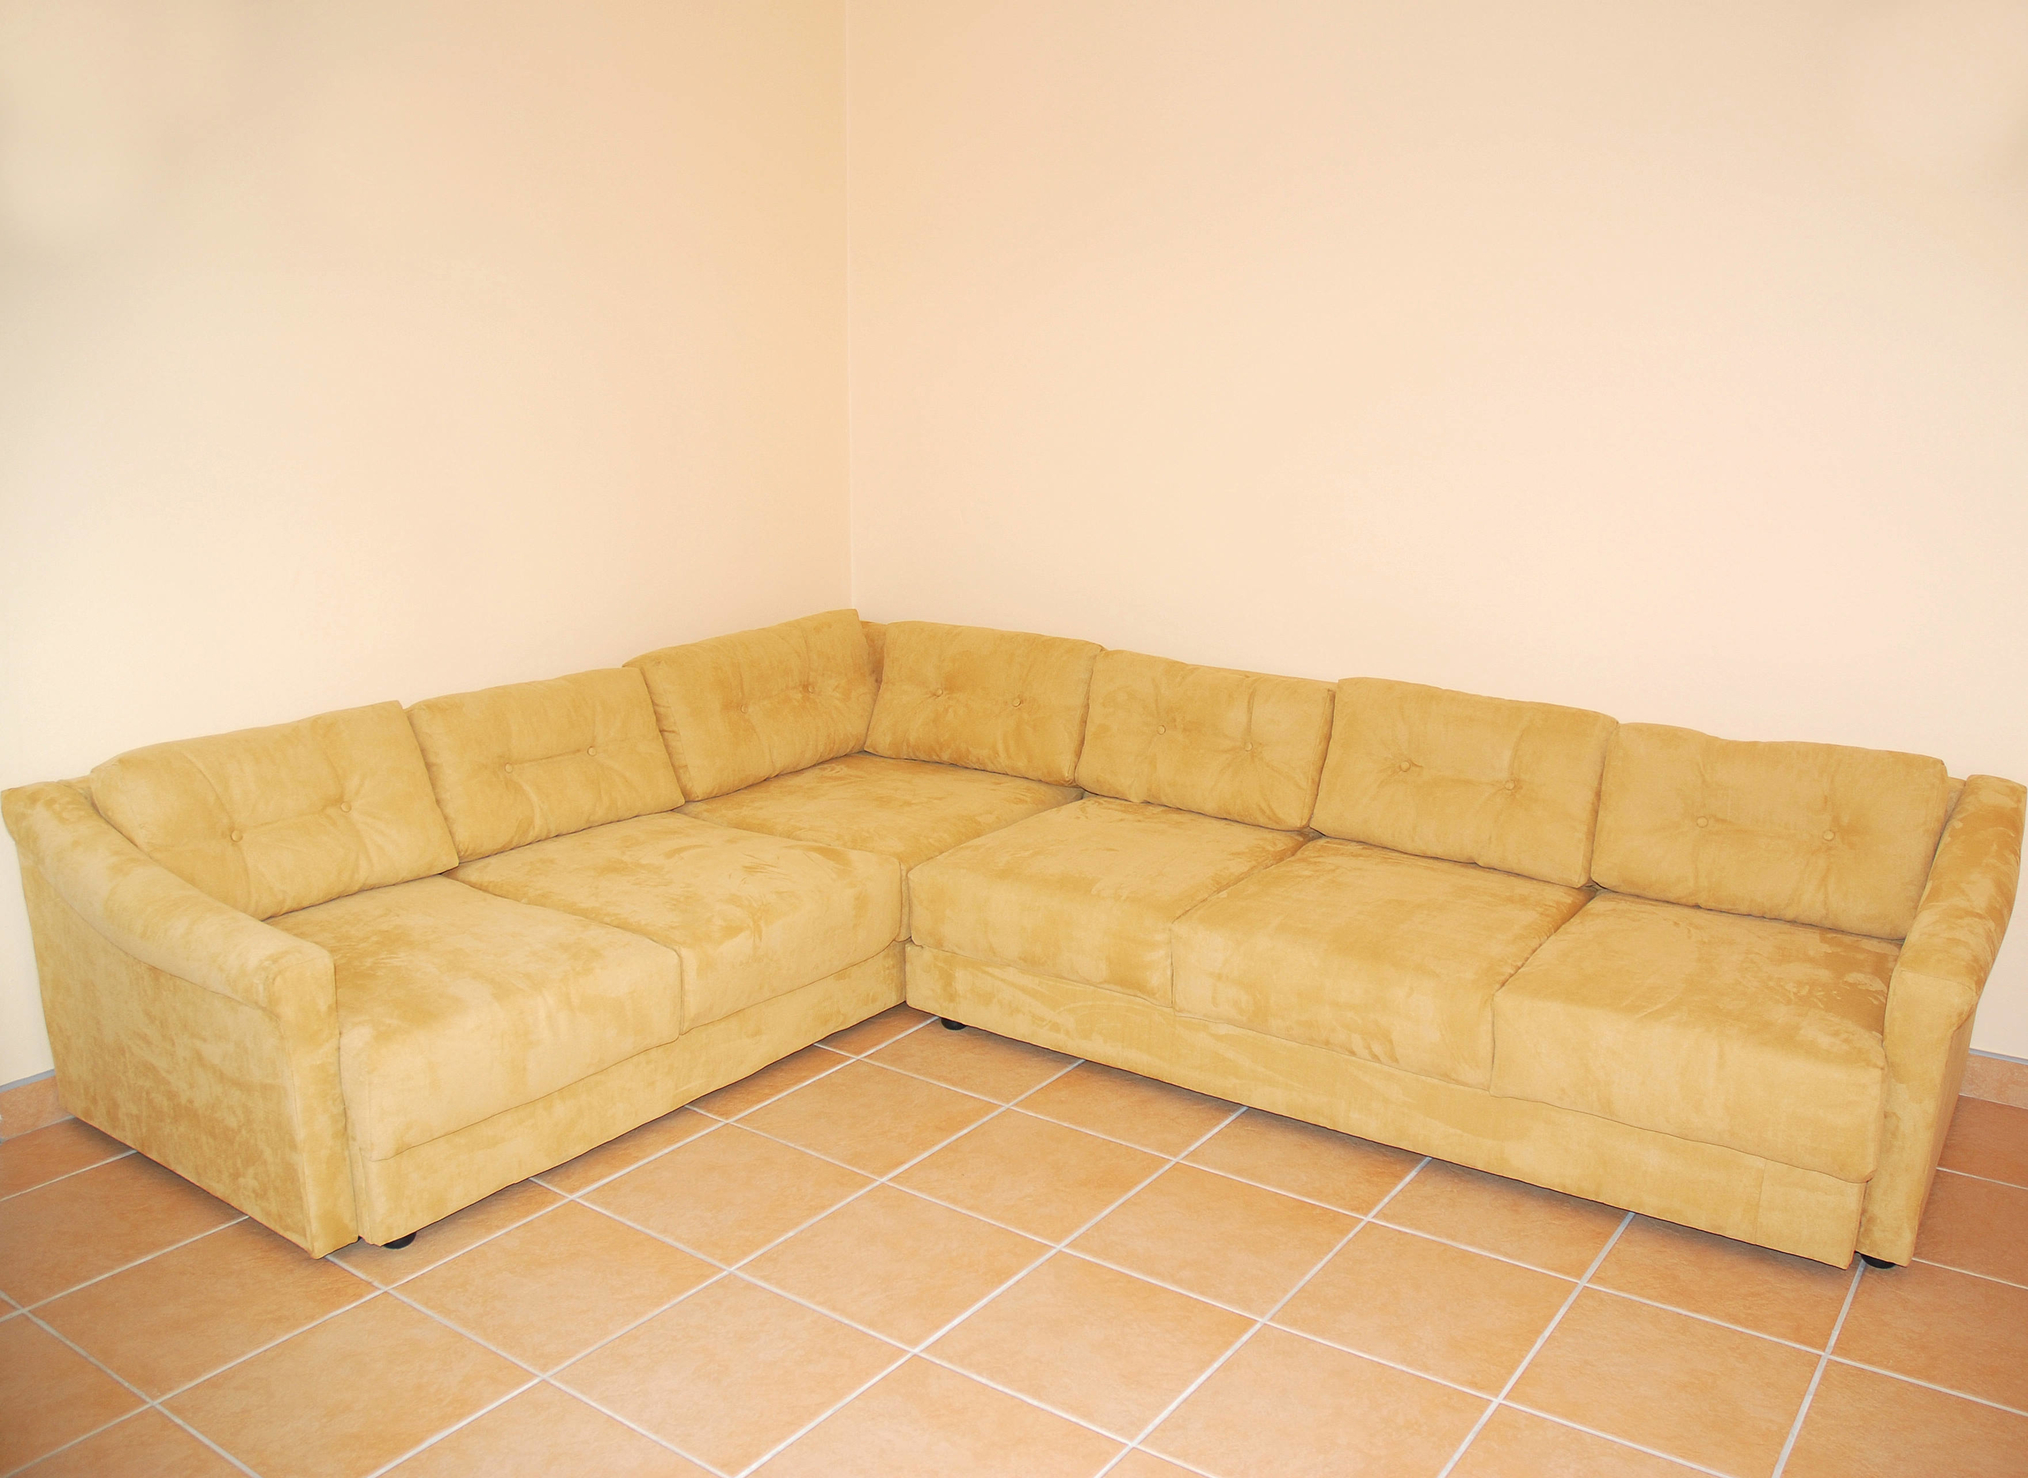 A plain beige corner sofa